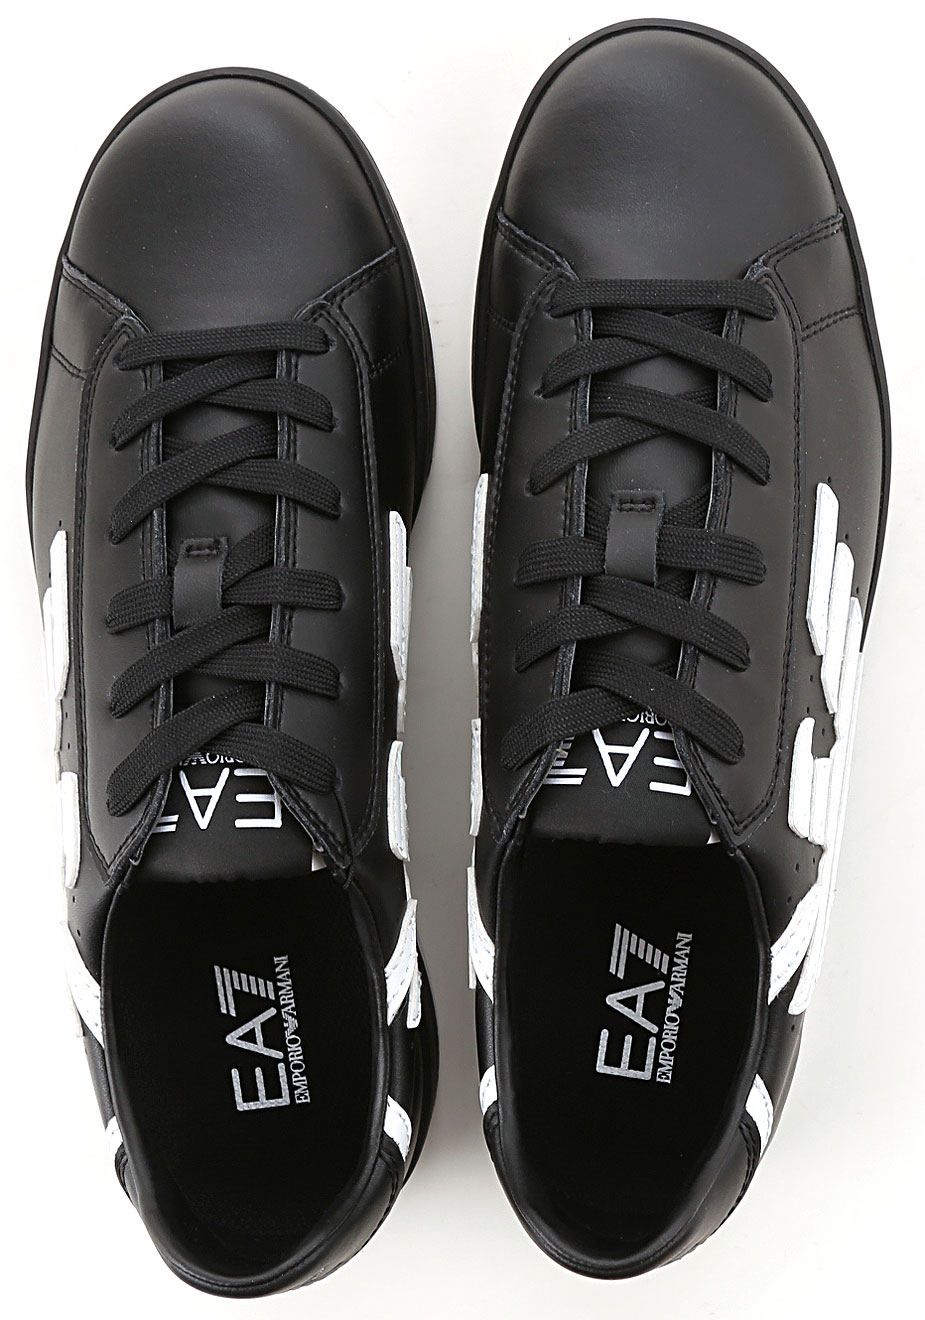 Mens Shoes Emporio Armani, Style code: x8x043-xk075-a120